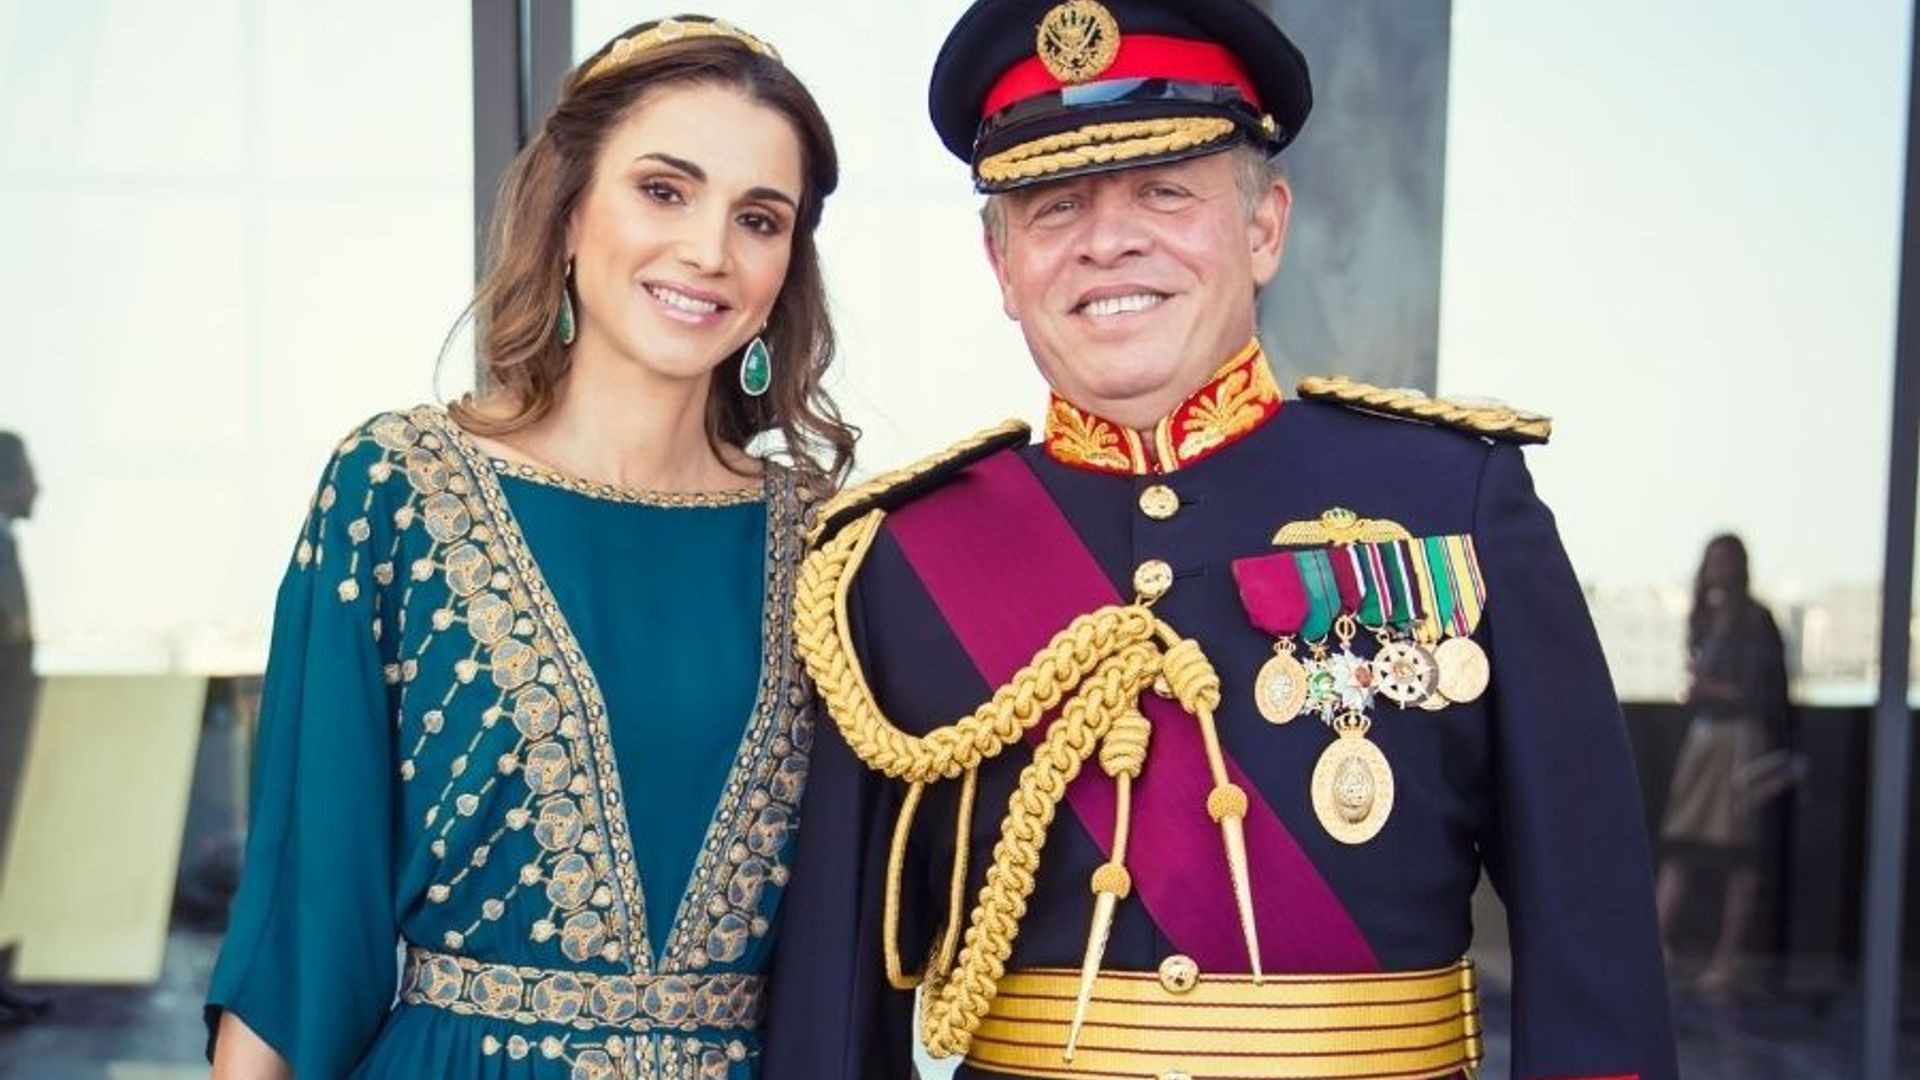 Queen Rania of Jordan shares loving message on wedding anniversary to King Abdullah II